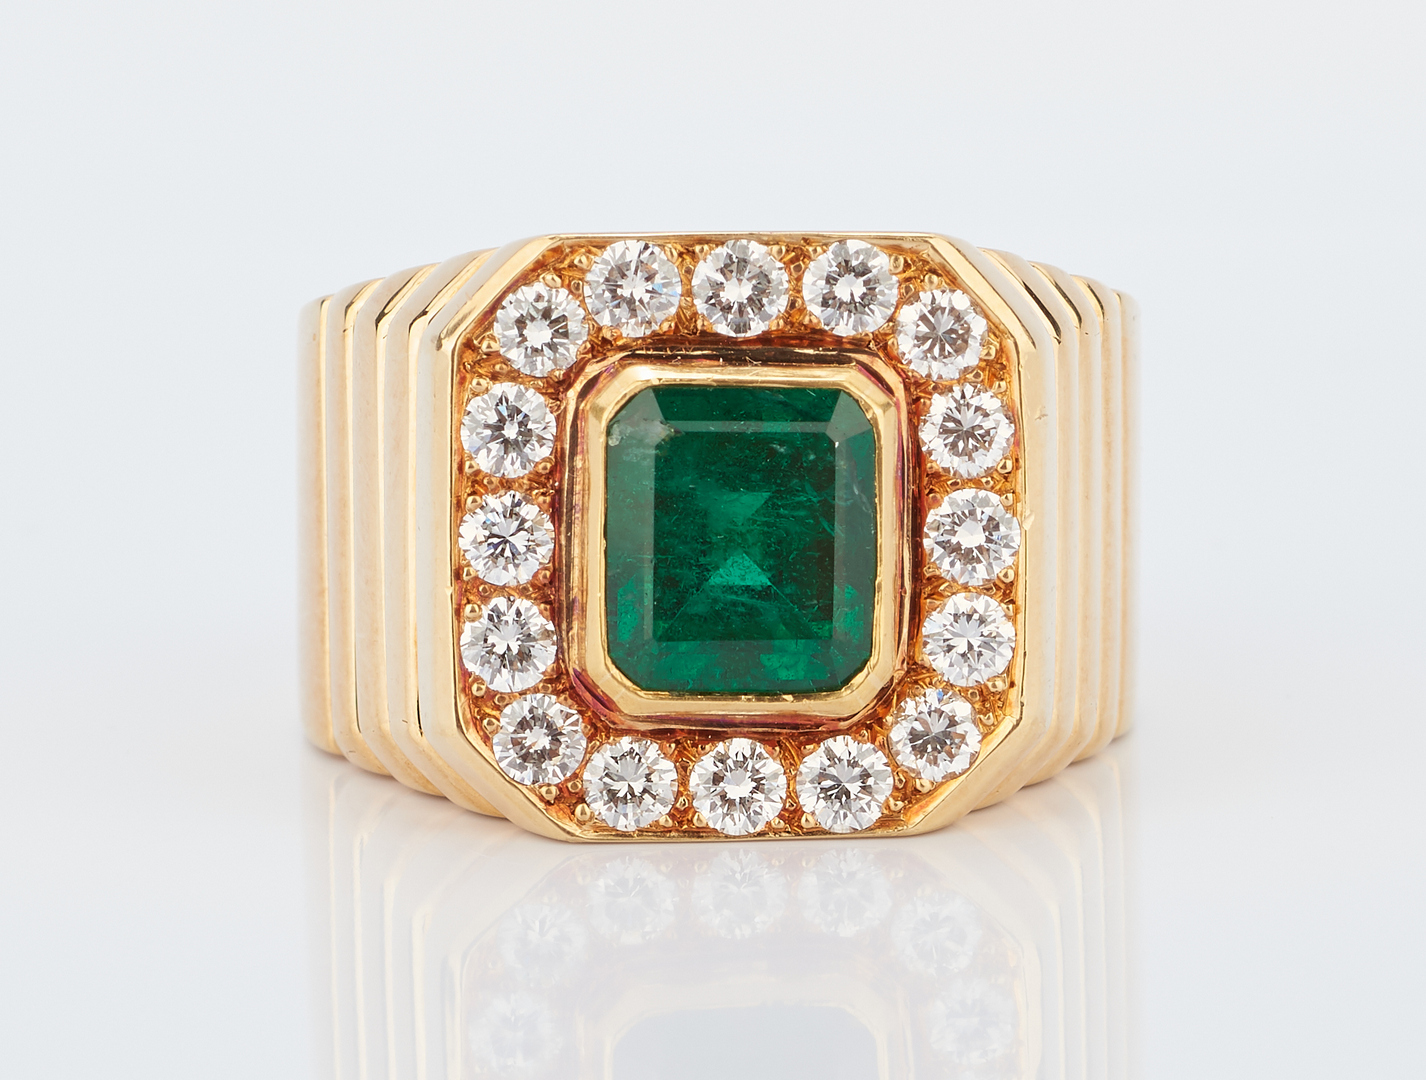 Lot 216: 2.5 Carat Emerald and Diamond Men's Ring